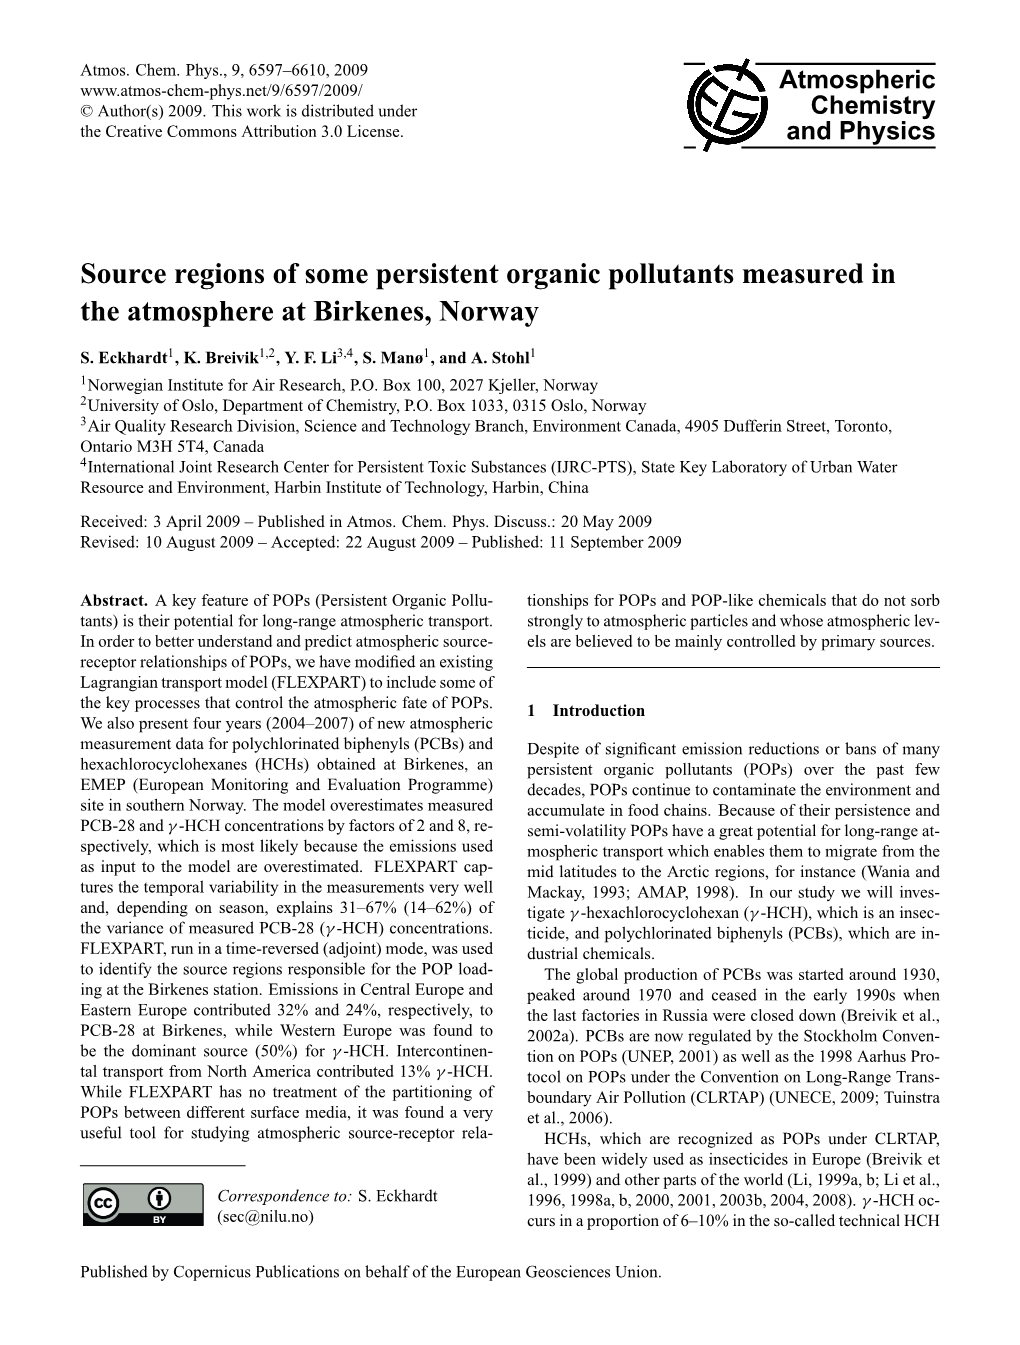 Source Regions of Some Persistent Organic Pollutants Measured in the Atmosphere at Birkenes, Norway